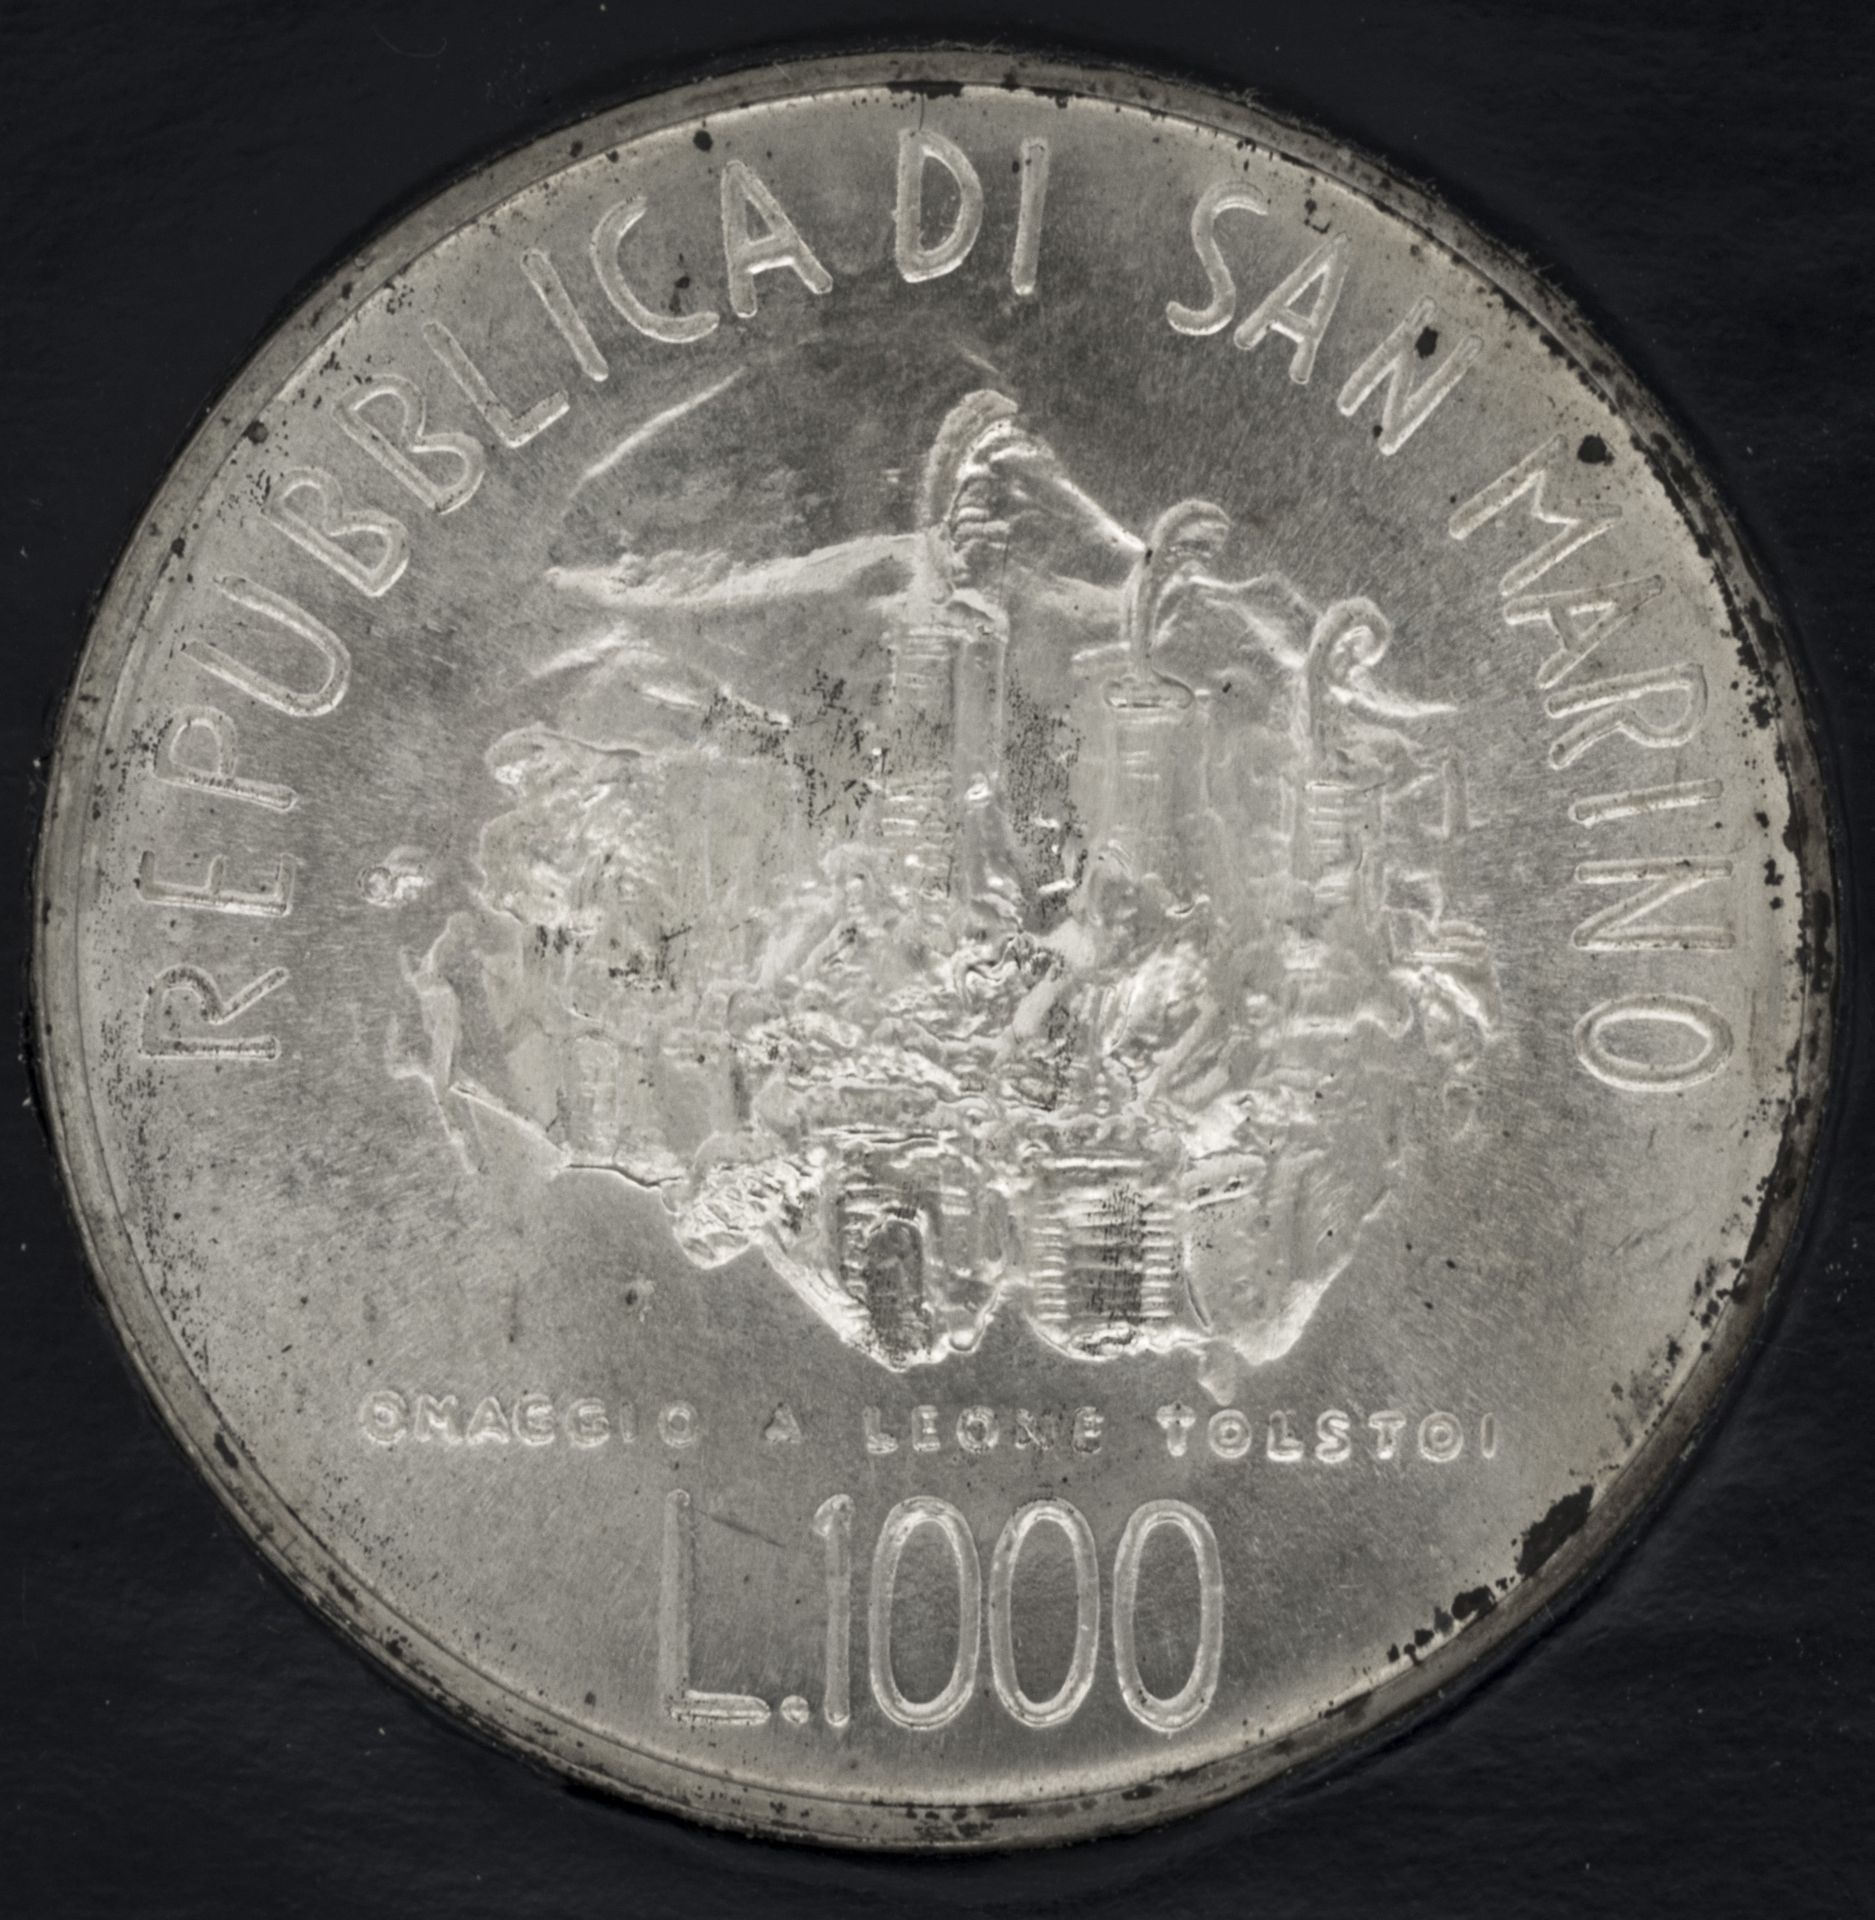 San Marino 1978, 1000 Lire Silbermünze "Tolstoj". In Etui. Erhaltung: Stgl. - Image 2 of 2